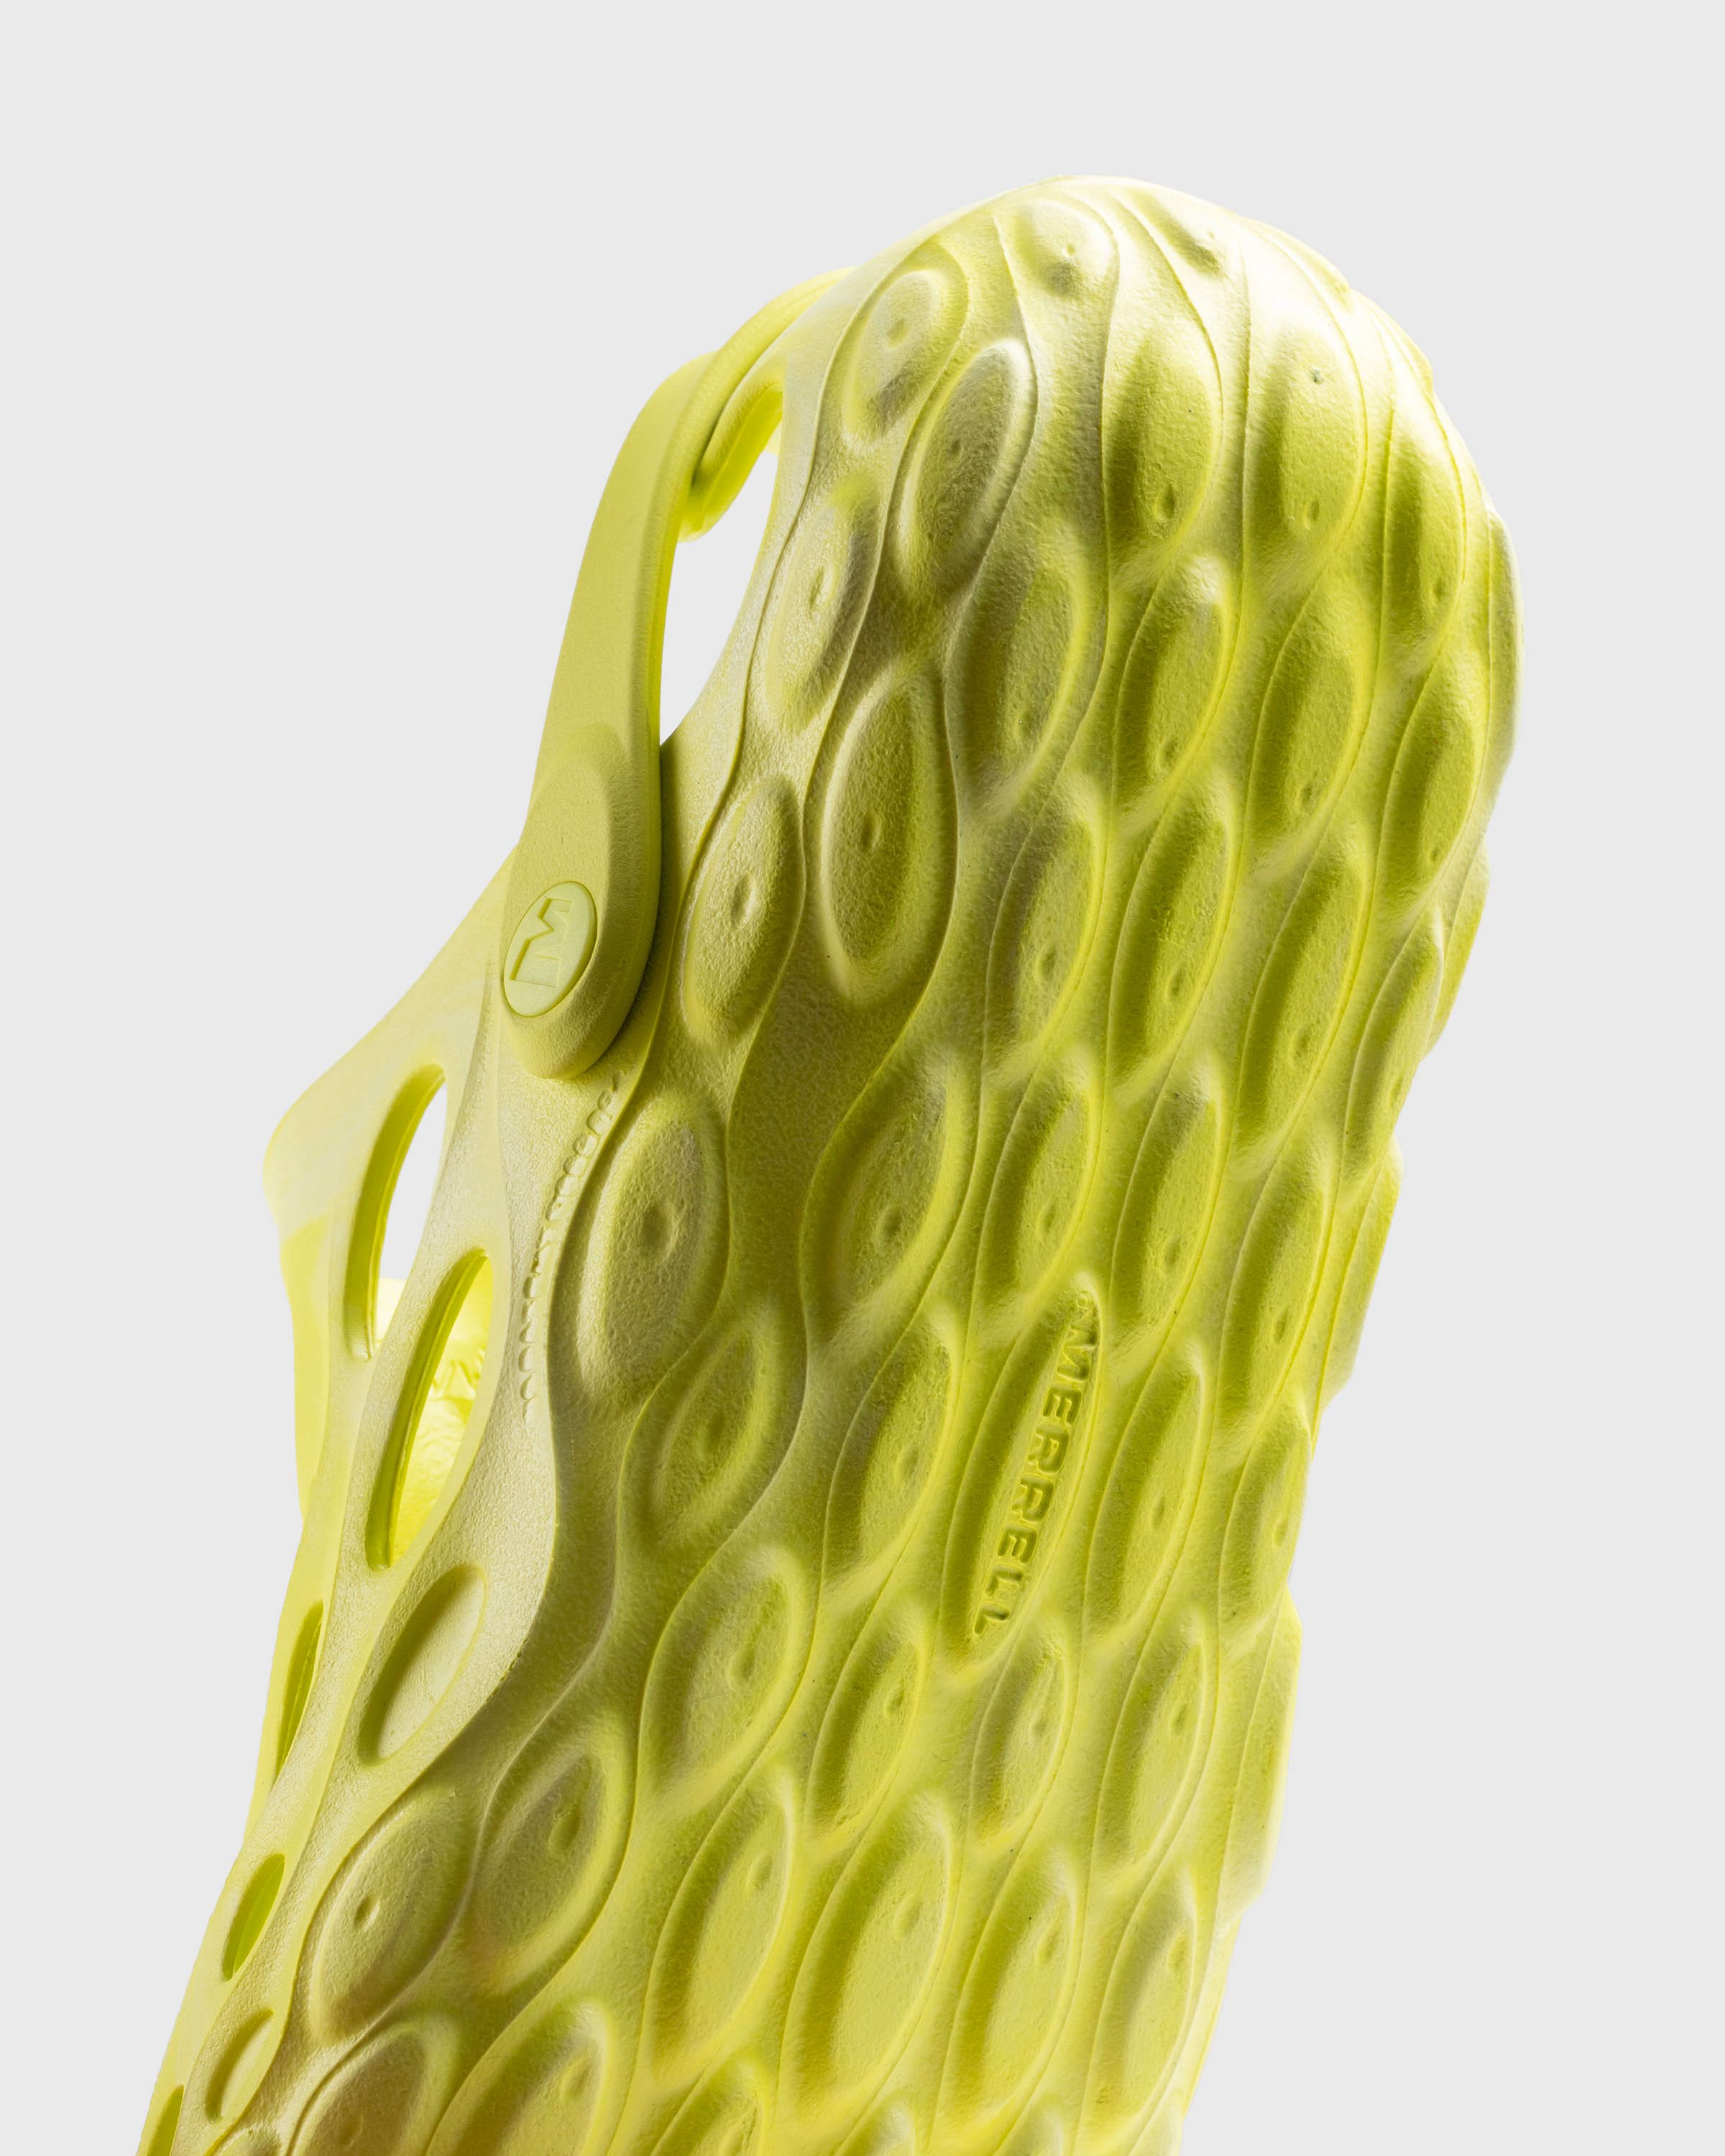 Merrell - Hydro Moc Pomelo - Footwear - Yellow - Image 6